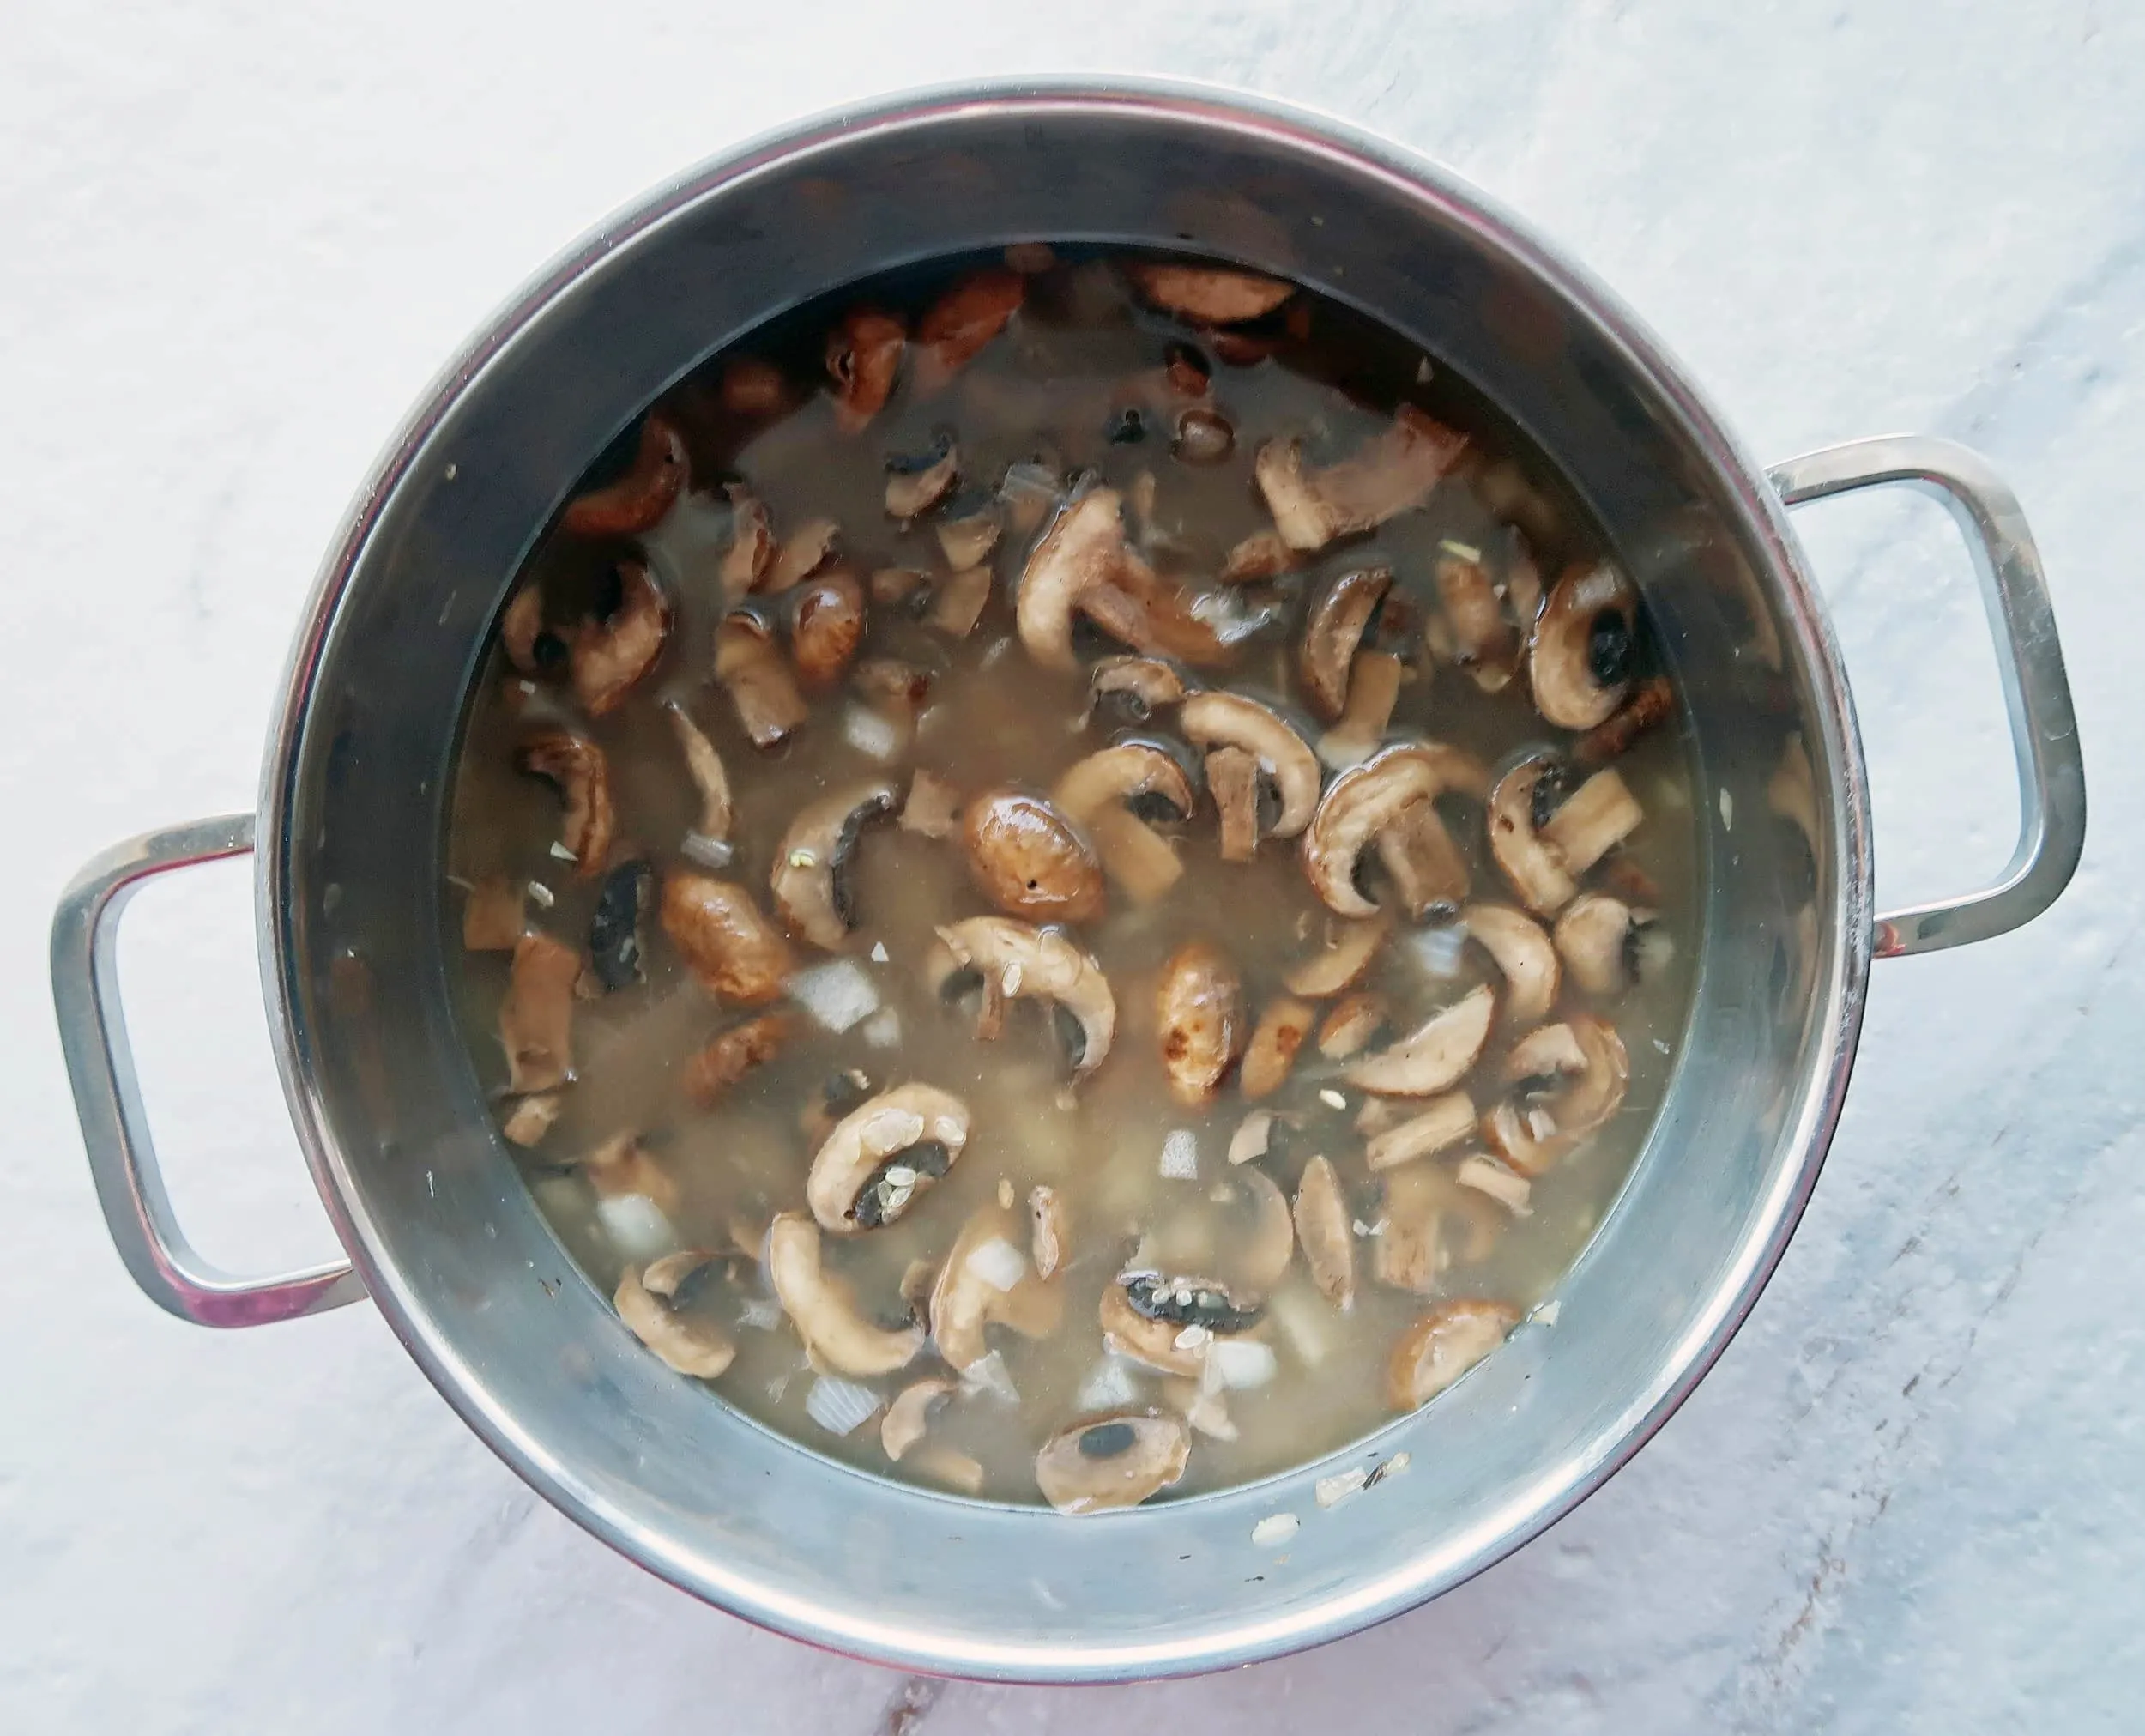 A pot of mushrooms in broth.